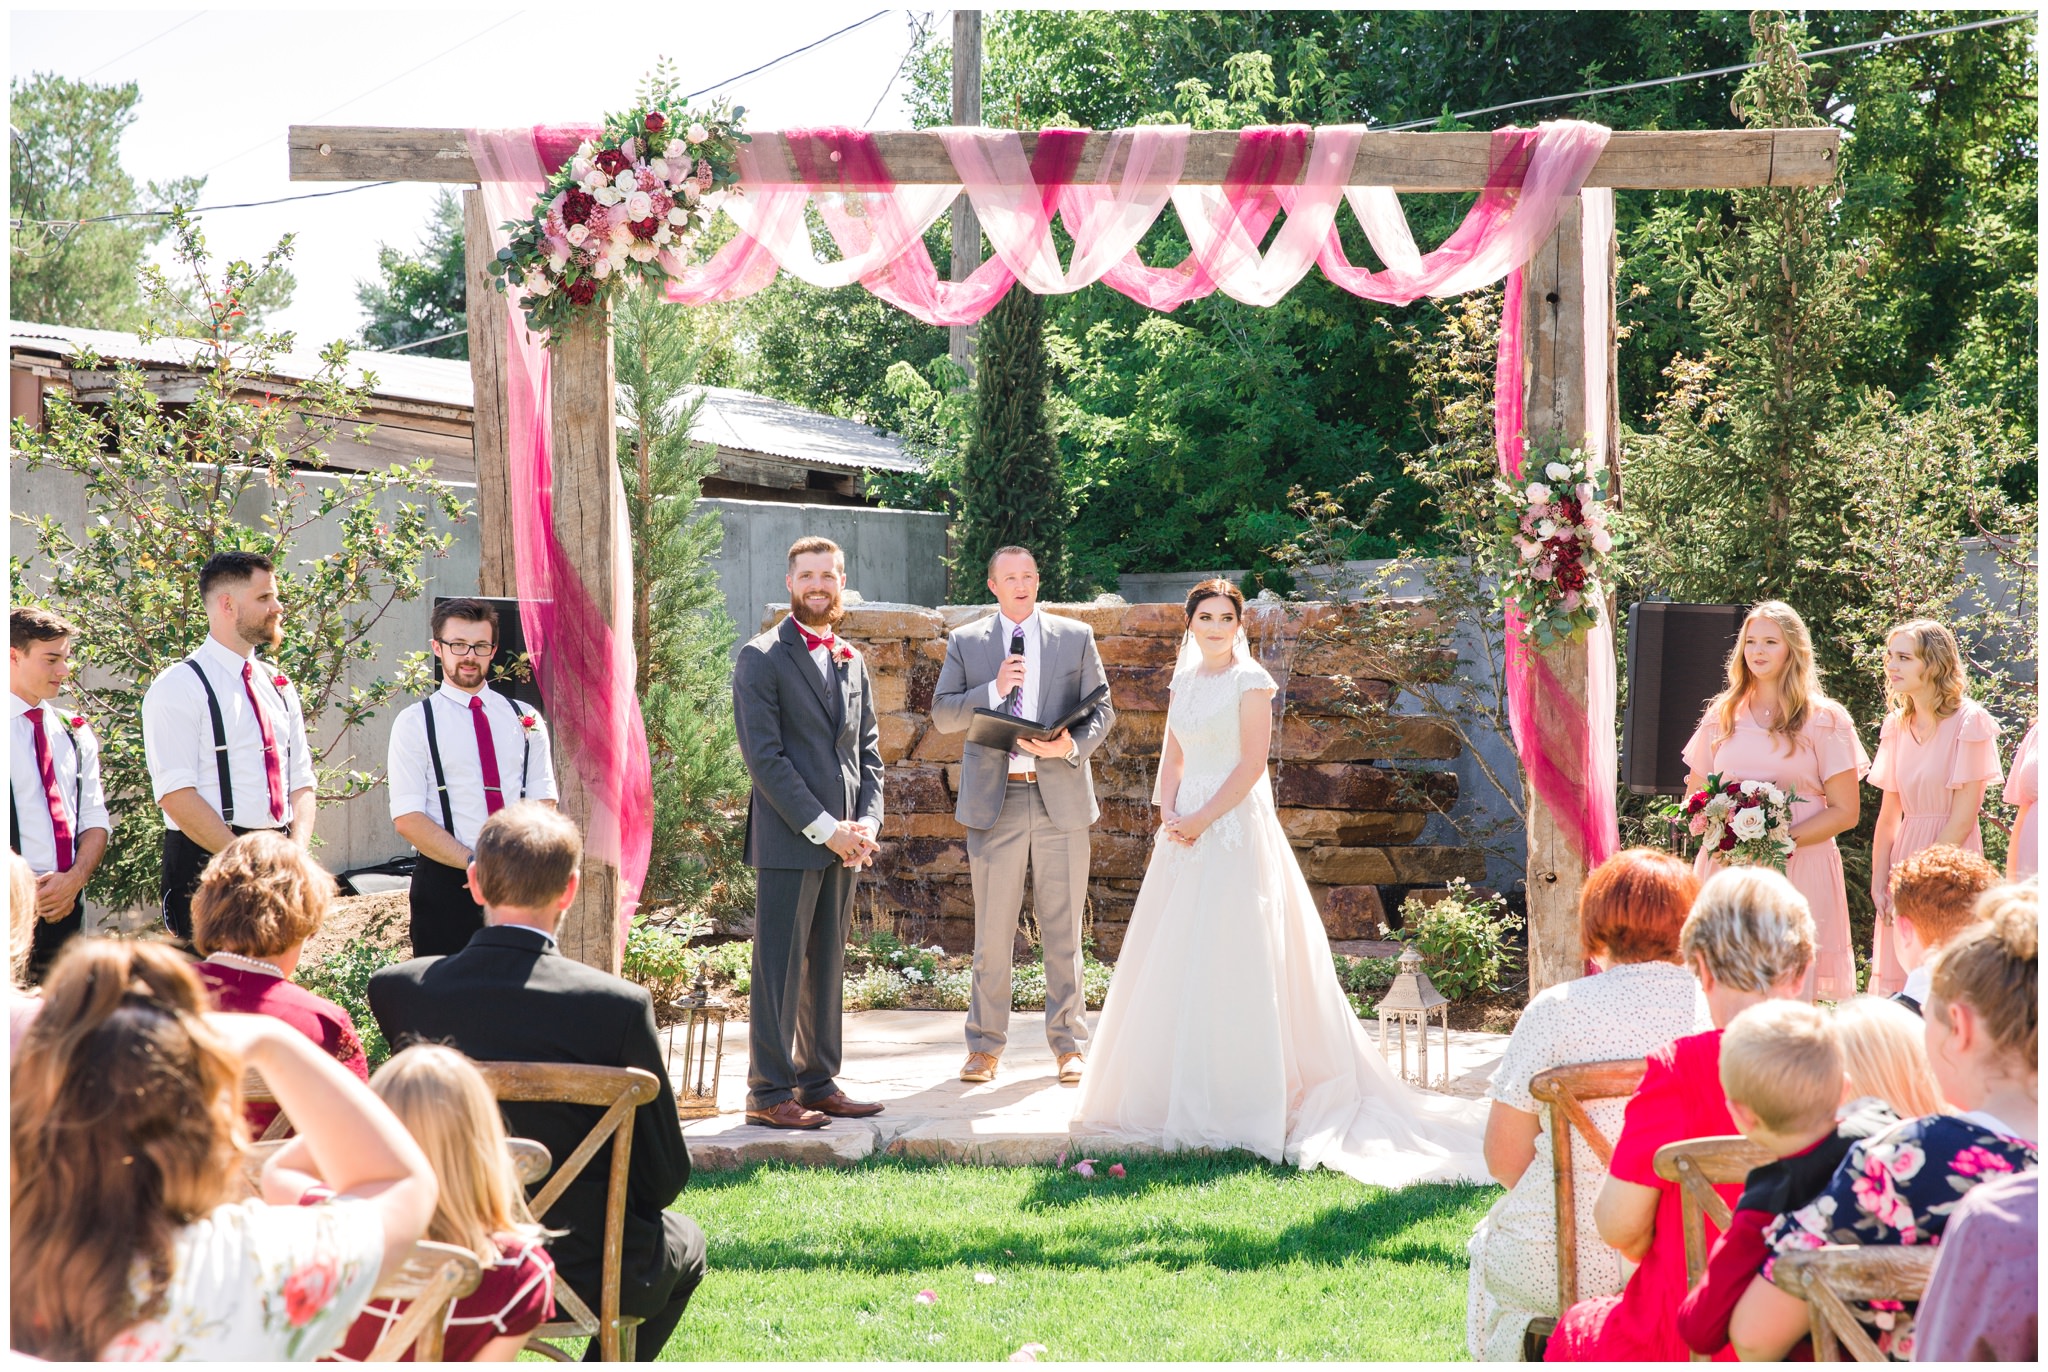 Summer wedding ceremony at the Wild Oak Venue in Lindon, Utah. Burgundy floral arrangement on arch above bride and groom.